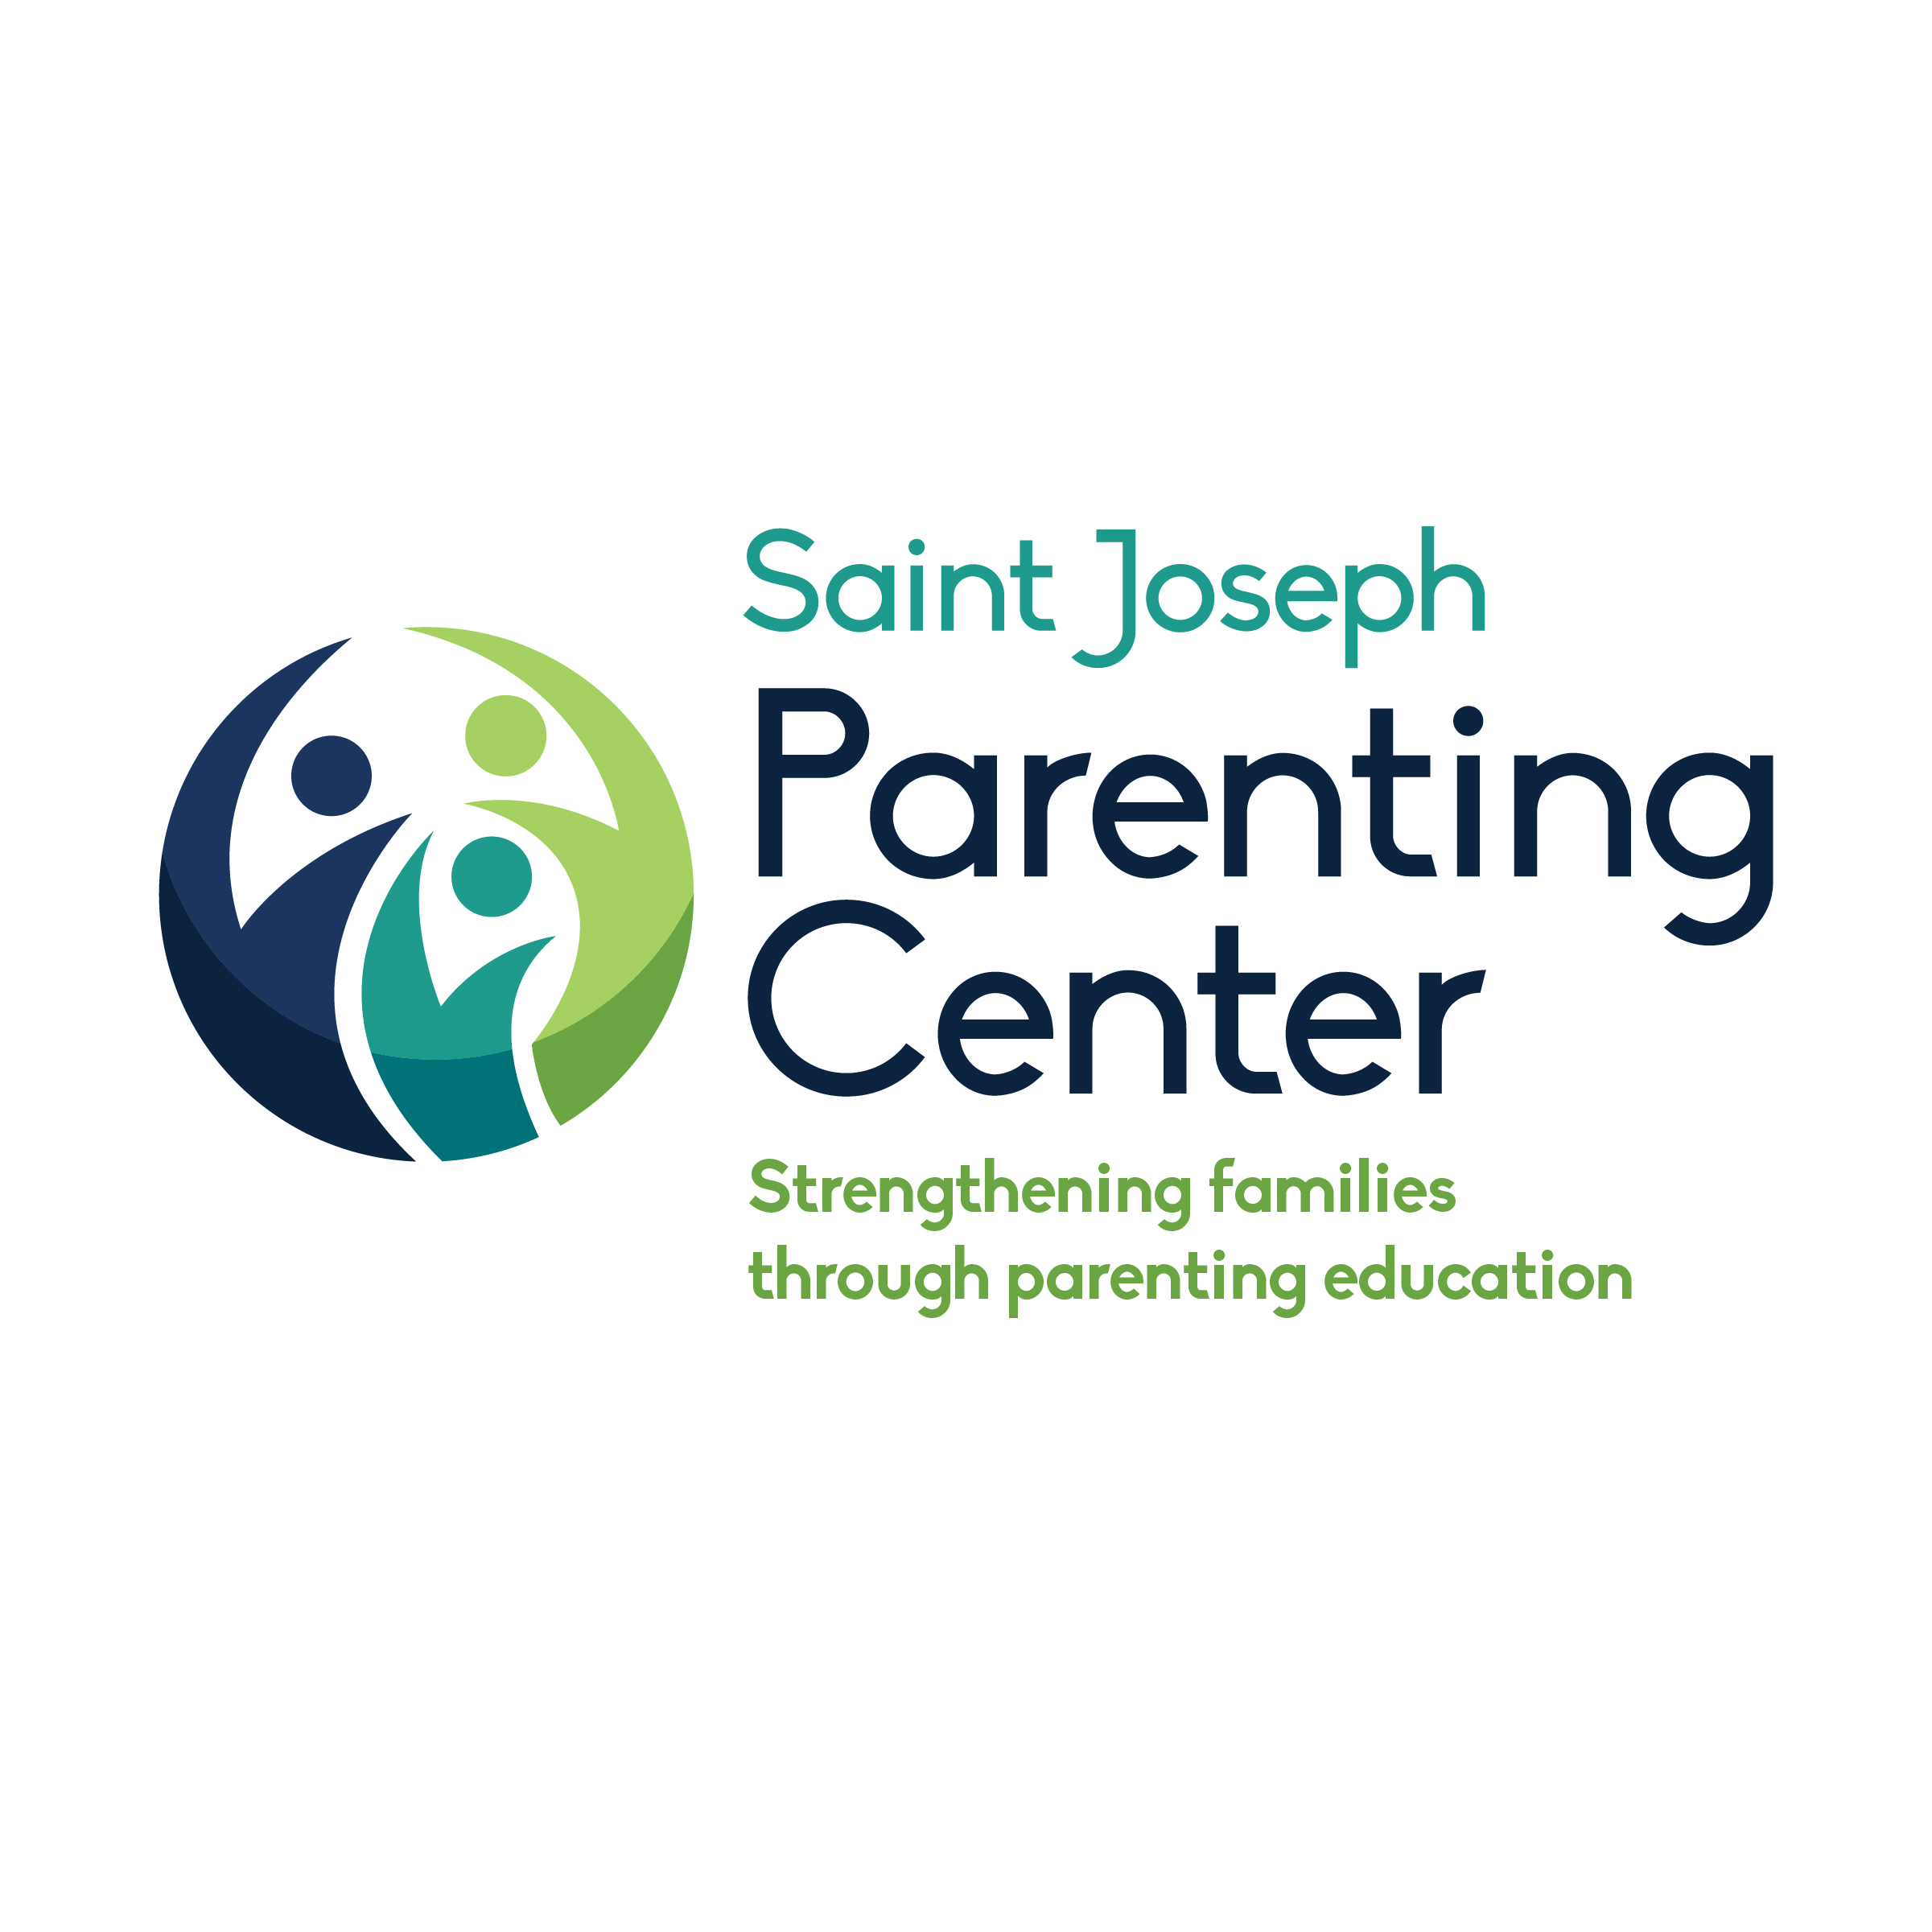 St. Joseph's Parenting Center